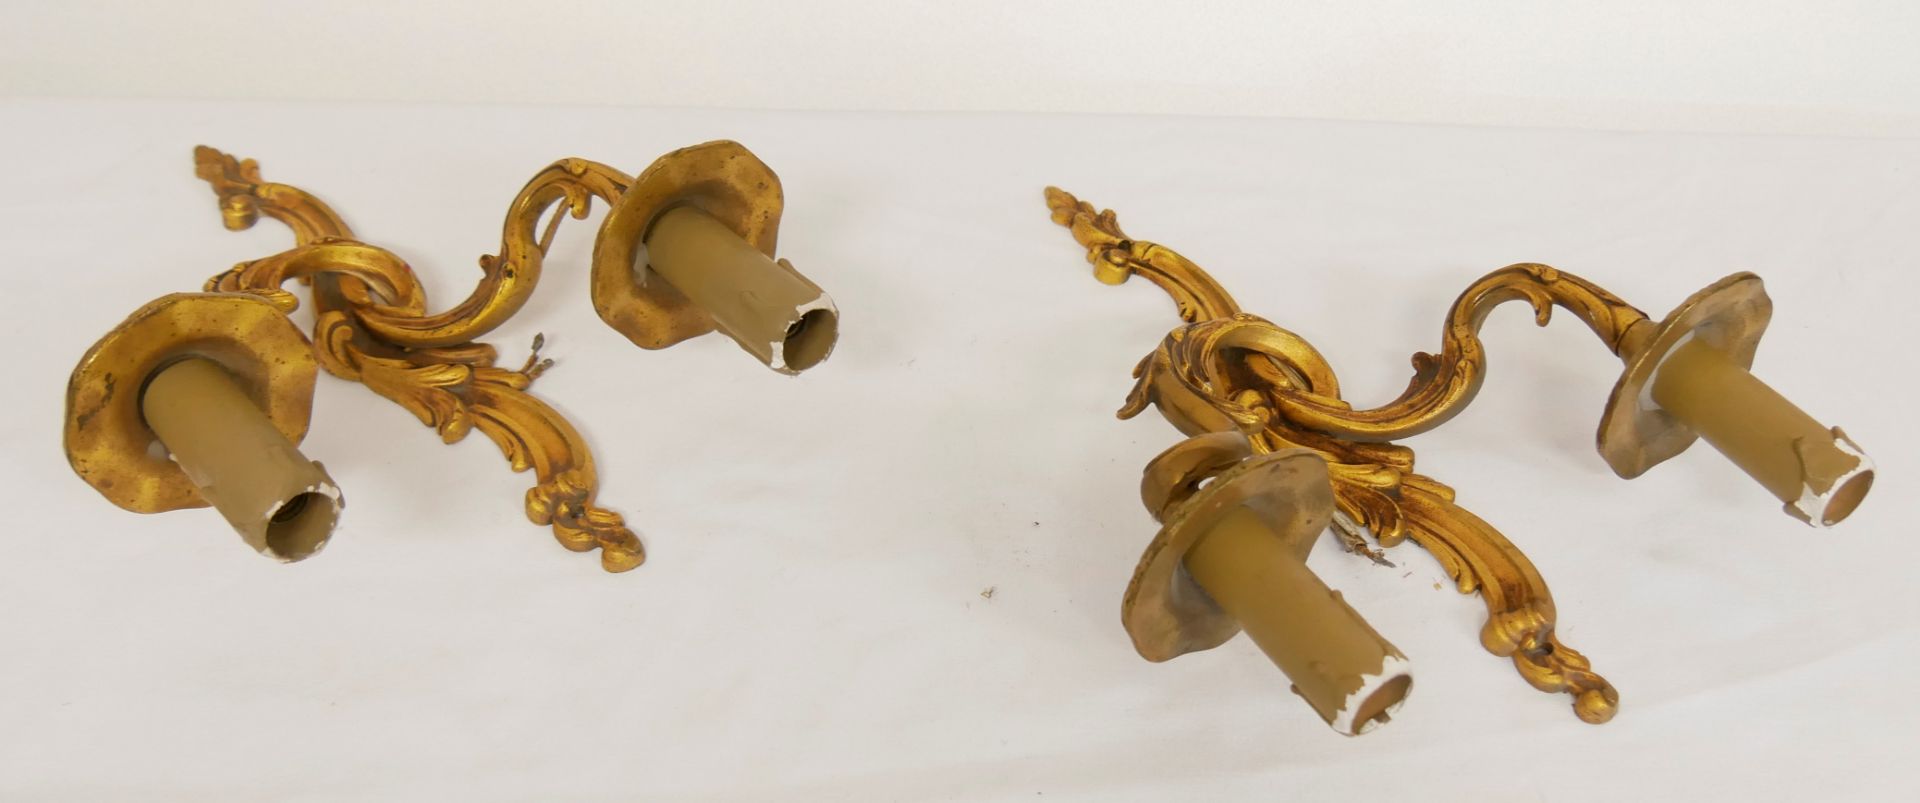 2 Jugendstil Bronze Wandlampen, feuervergoldet, 2-flammig, elektrifiziert. Höhe ca. 30 cm - Image 2 of 2